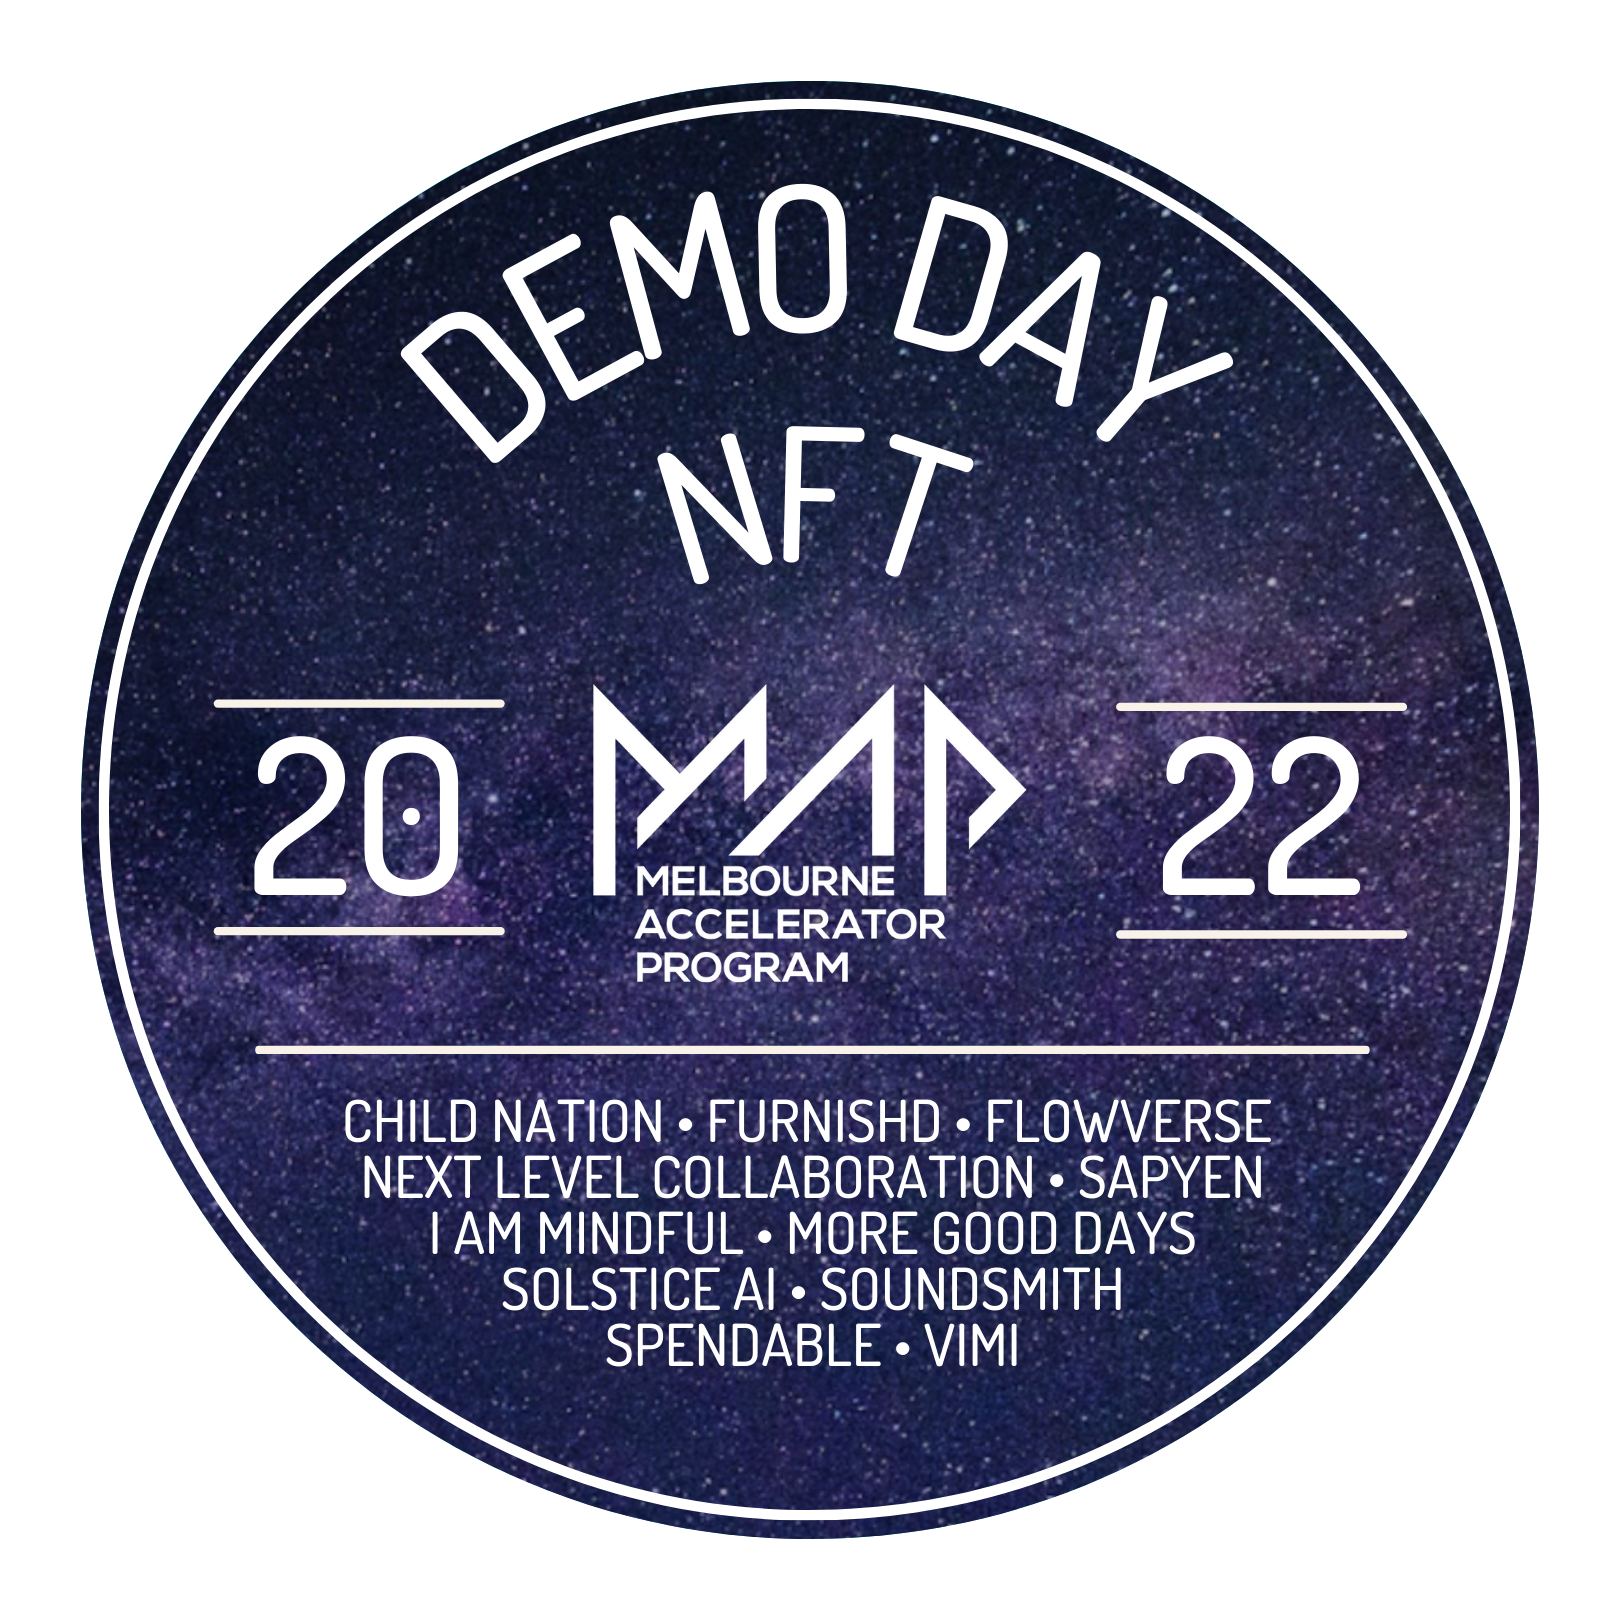 Demo Day NFT